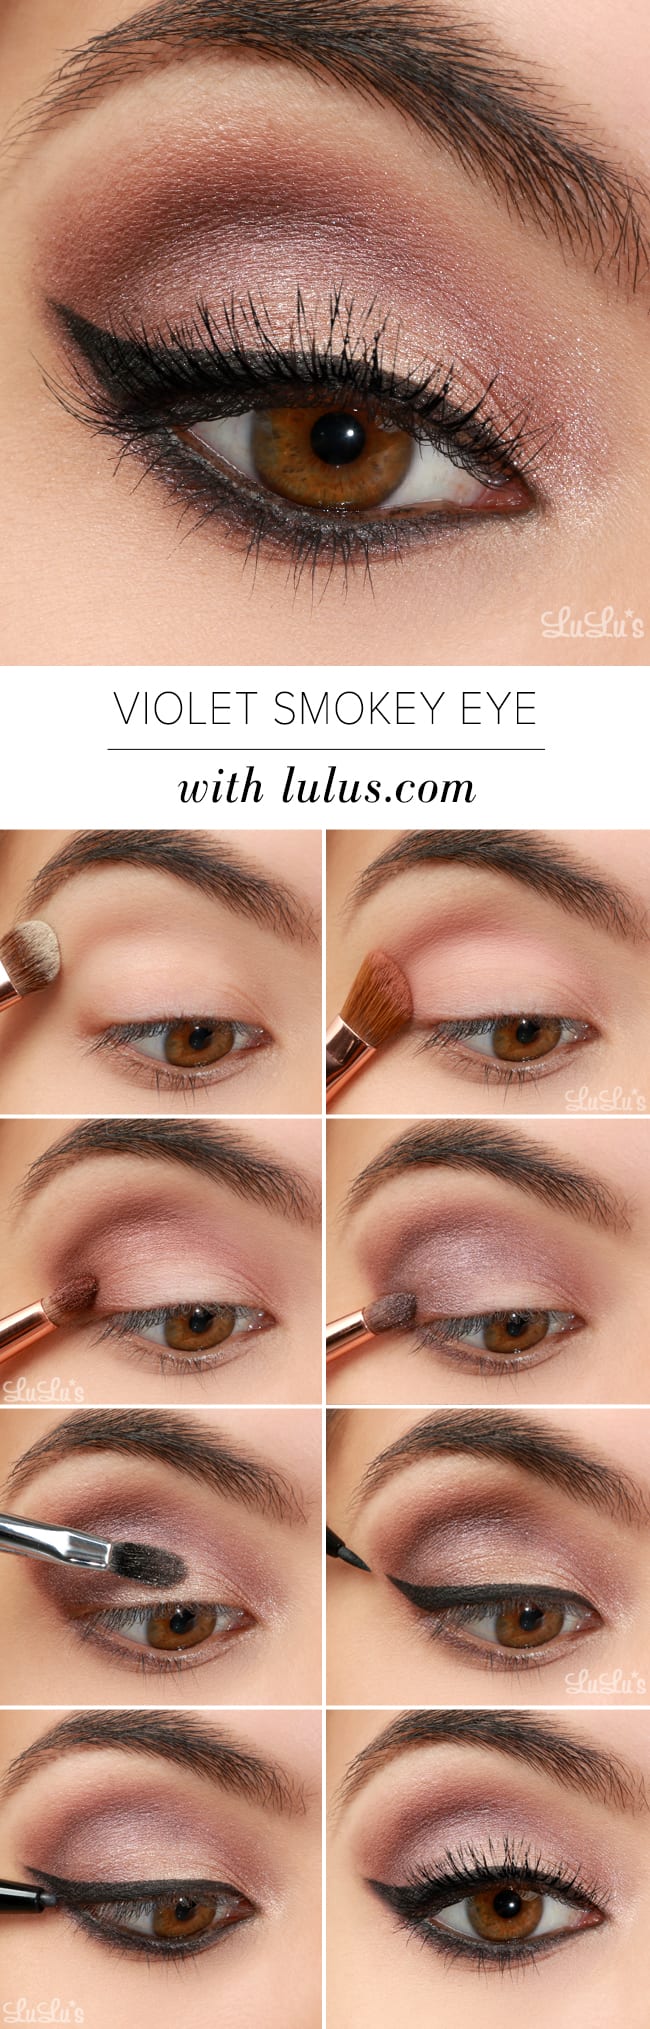 Lulus How-To: Violet Smokey Eye Makeup Tutorial - Lulus.com Fashion Blog